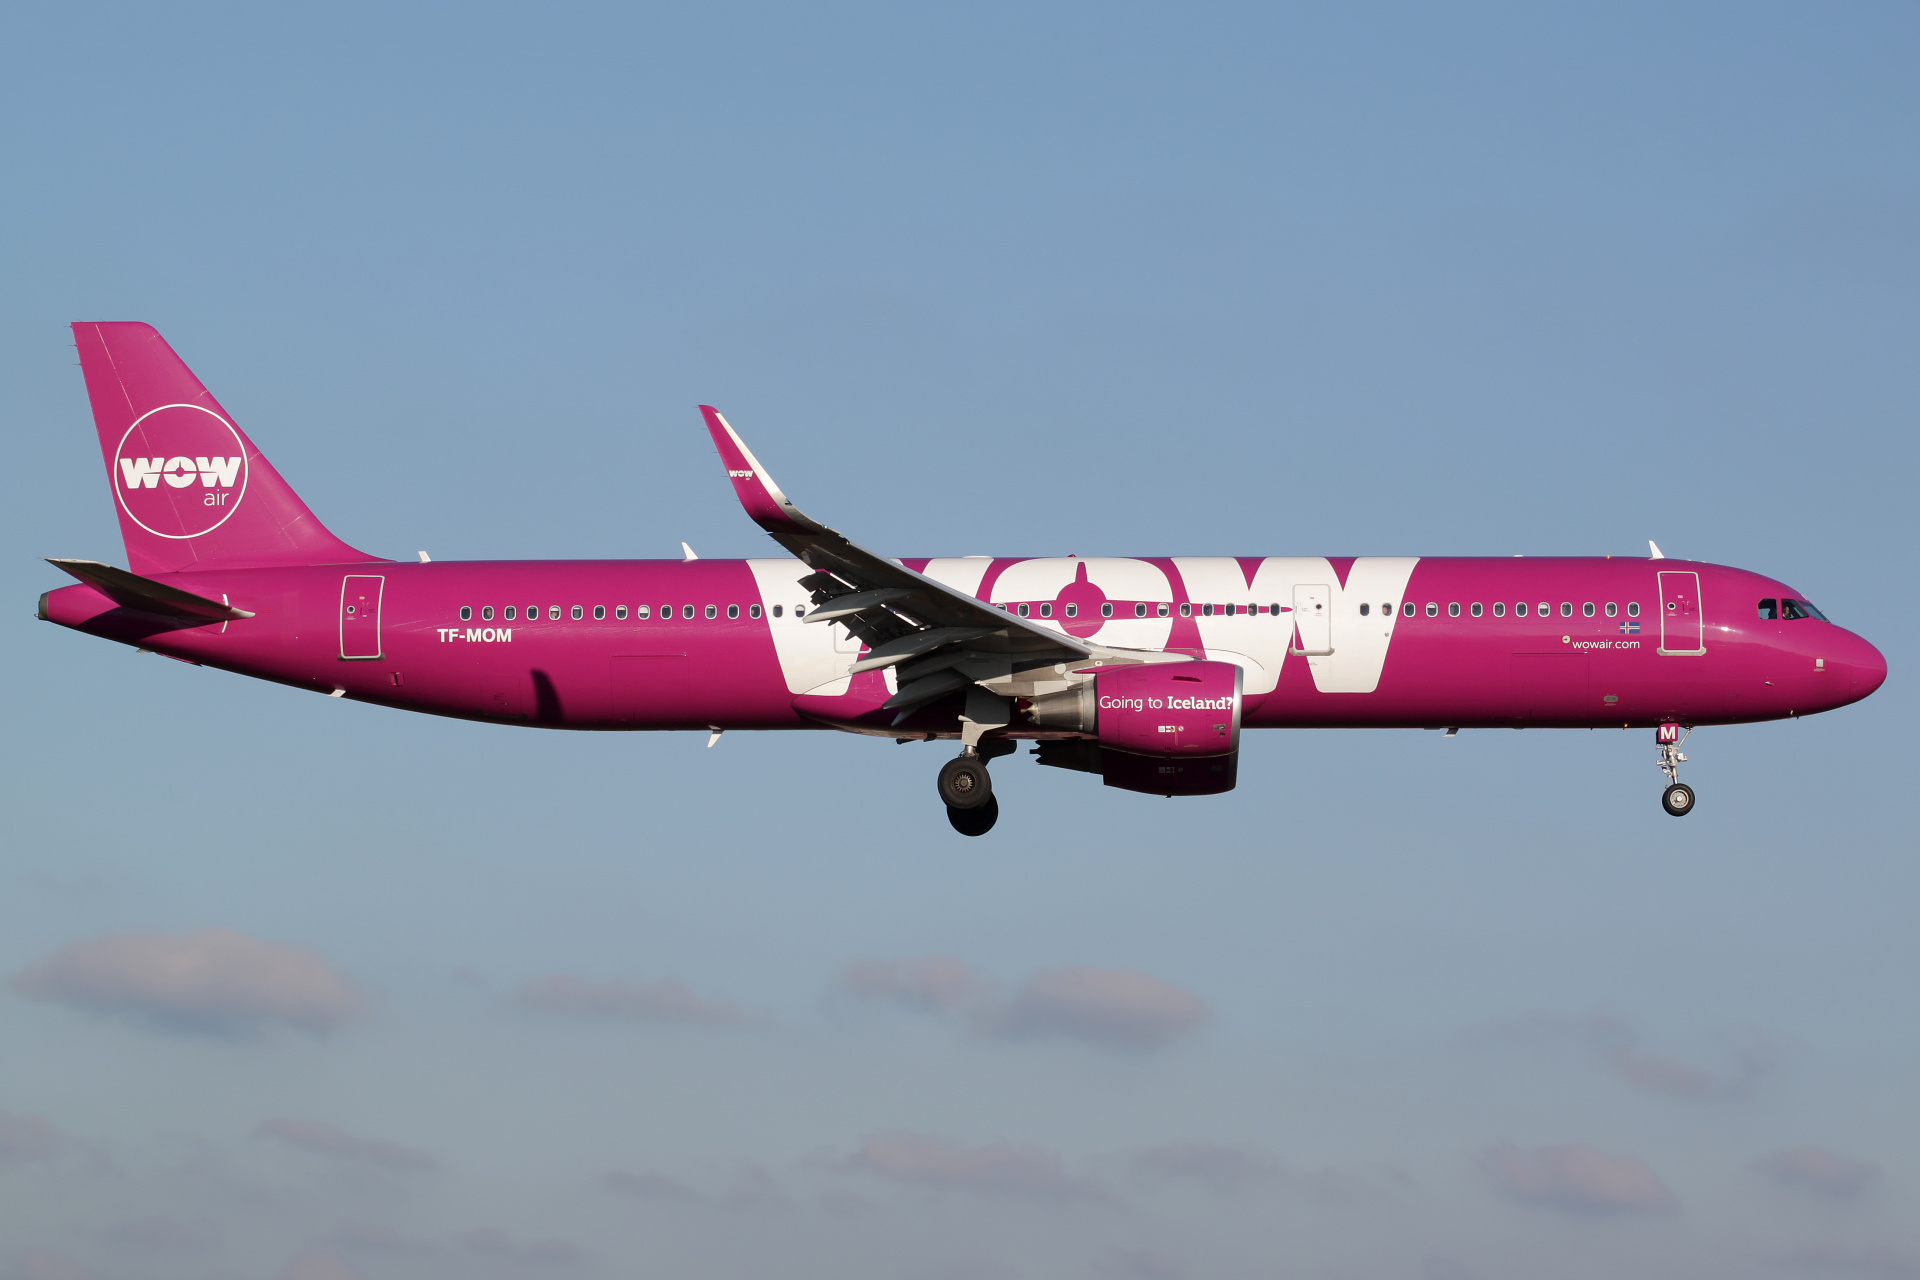 TF-MOM, WOW Air (Aircraft » EPWA Spotting » Airbus A321-200)